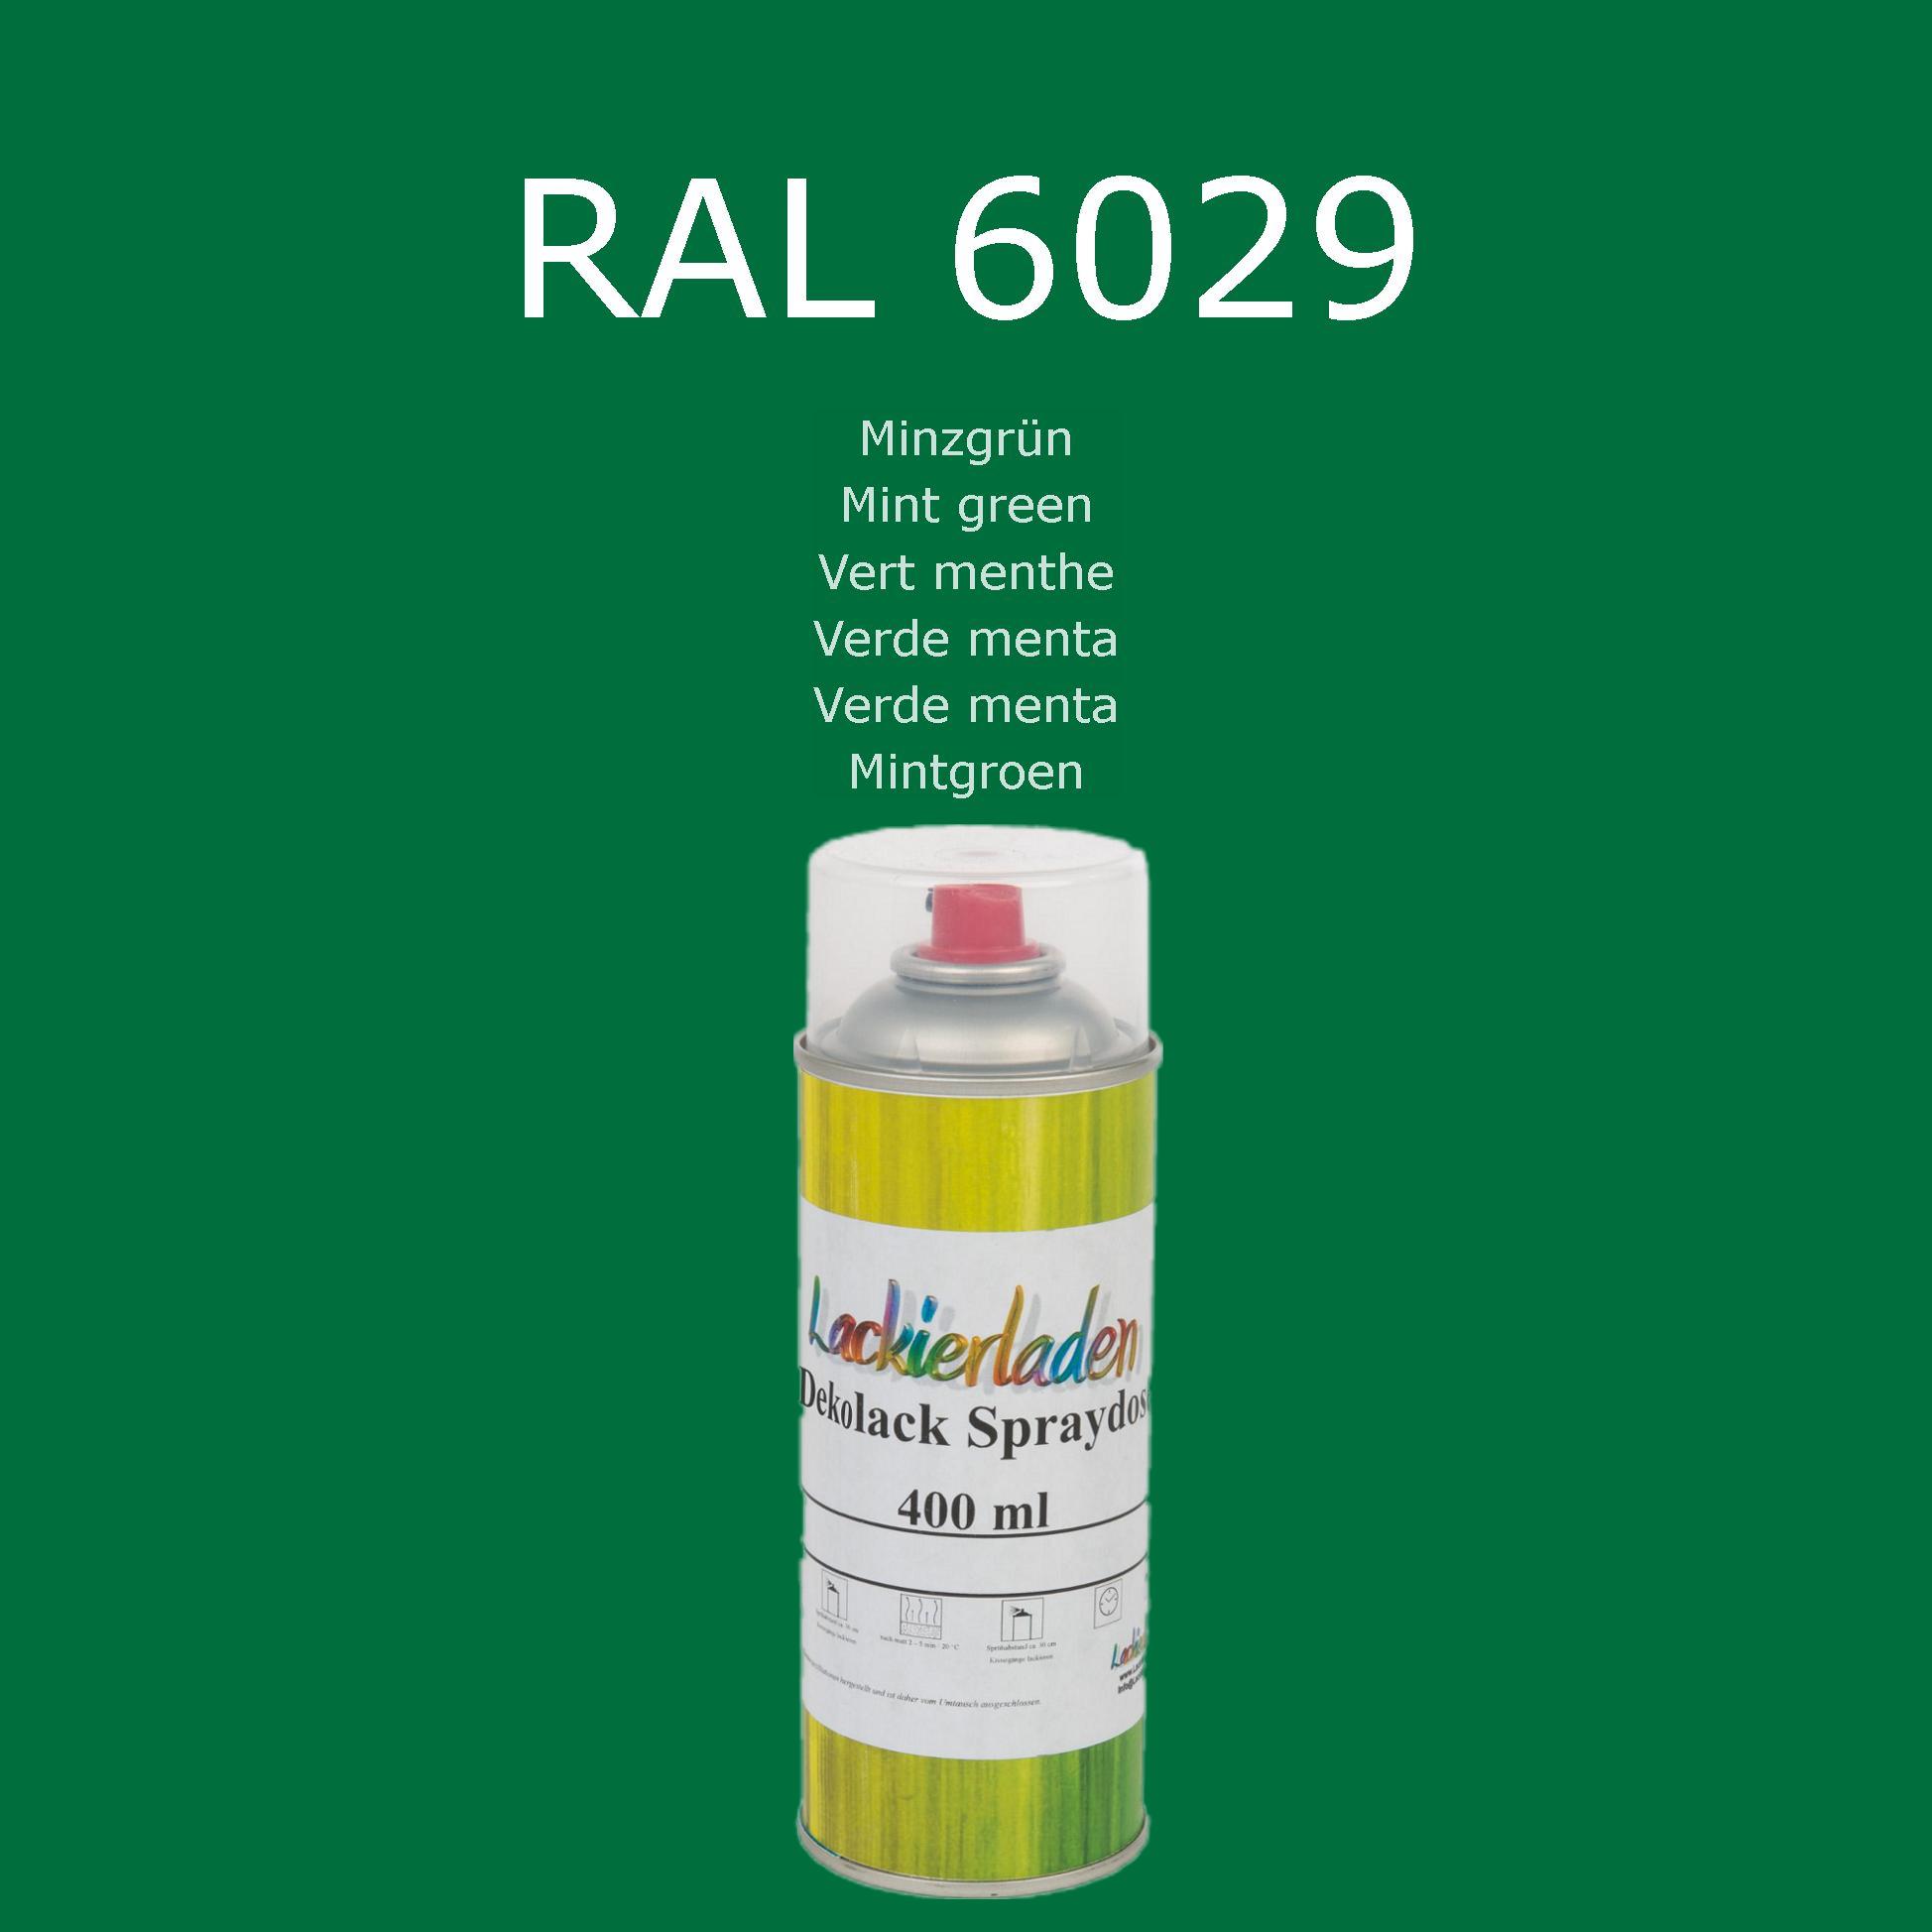 Dekolack Spraydose 400 ml RAL 6029 Minzgrün Mint green Vert menthe Verde menta Verde menta Mintgroen | Decolack Lackspray Sprüh Dose